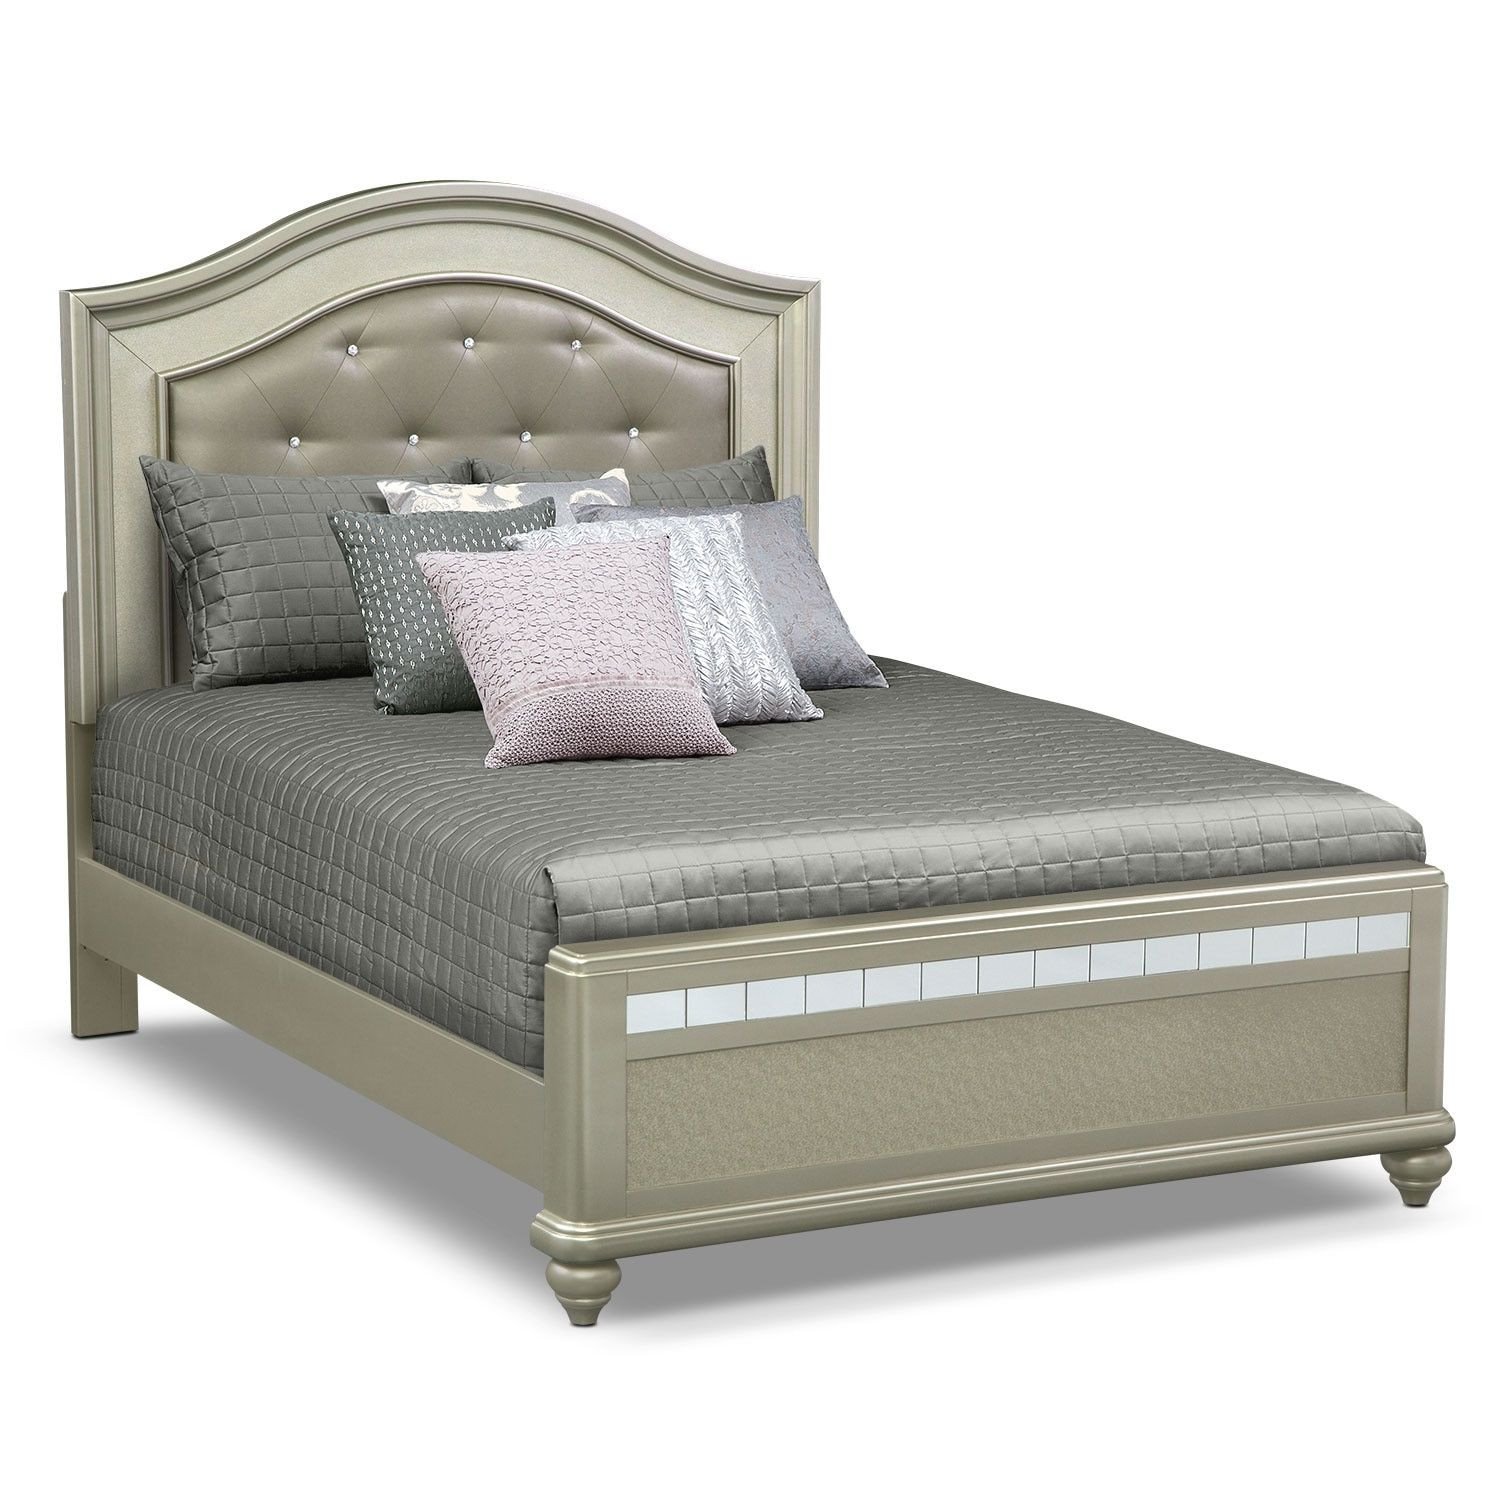 Value City Bedroom Set On Sale Lovely Serena Queen Bed Platinum